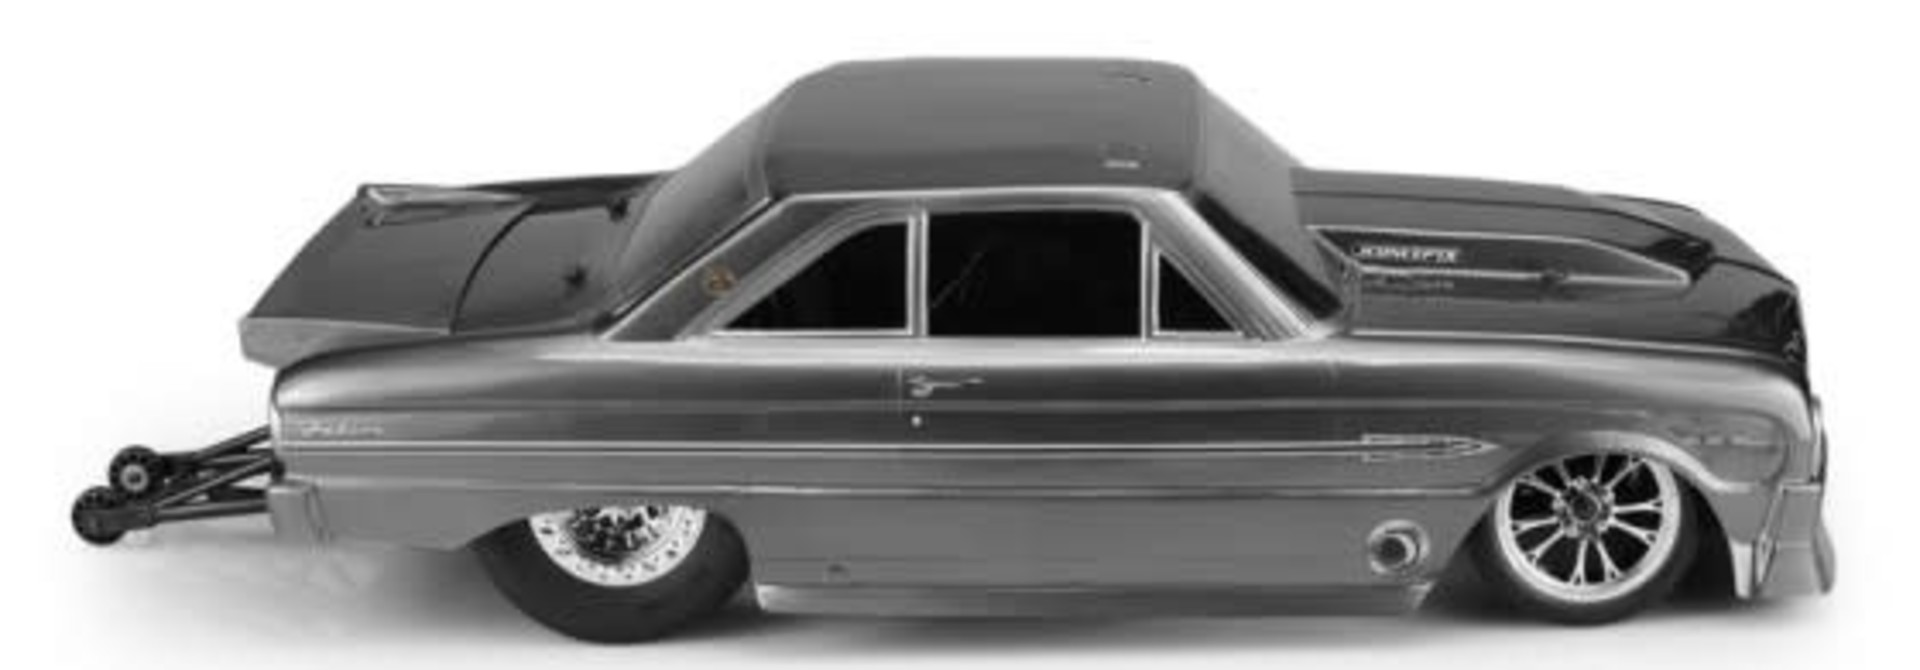 Jconcepts 1963 Ford Falcon, Street Eliminator body JCO0386